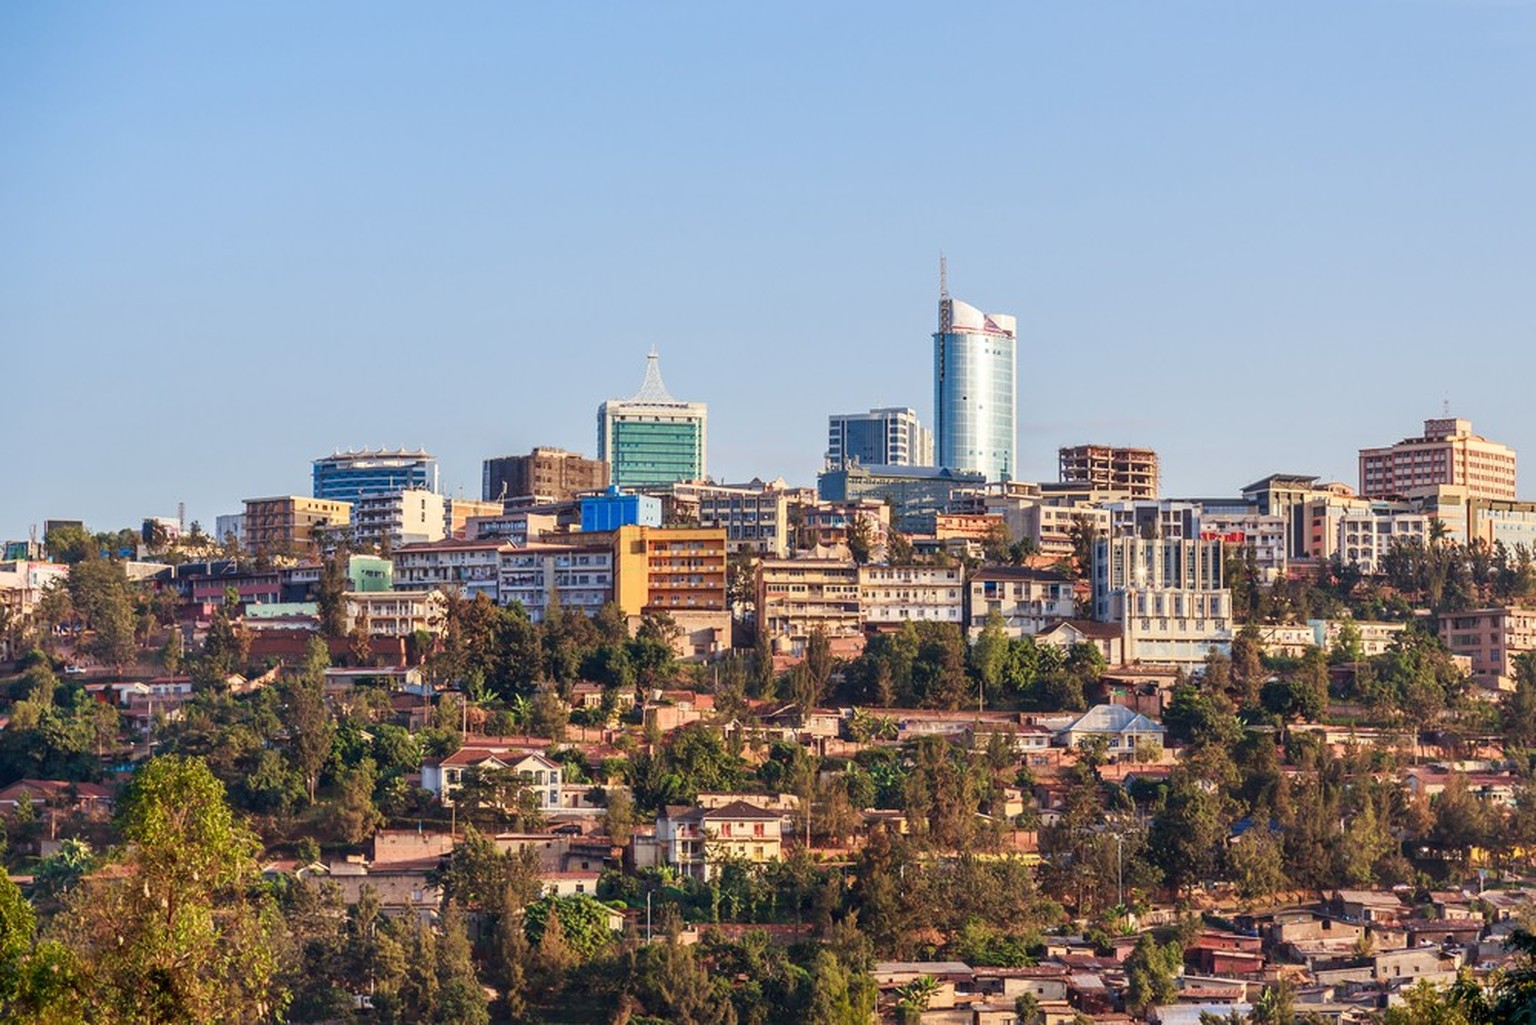 Les 50 plus beaux endroits du monde selon le Times: Kigali, Rwanda